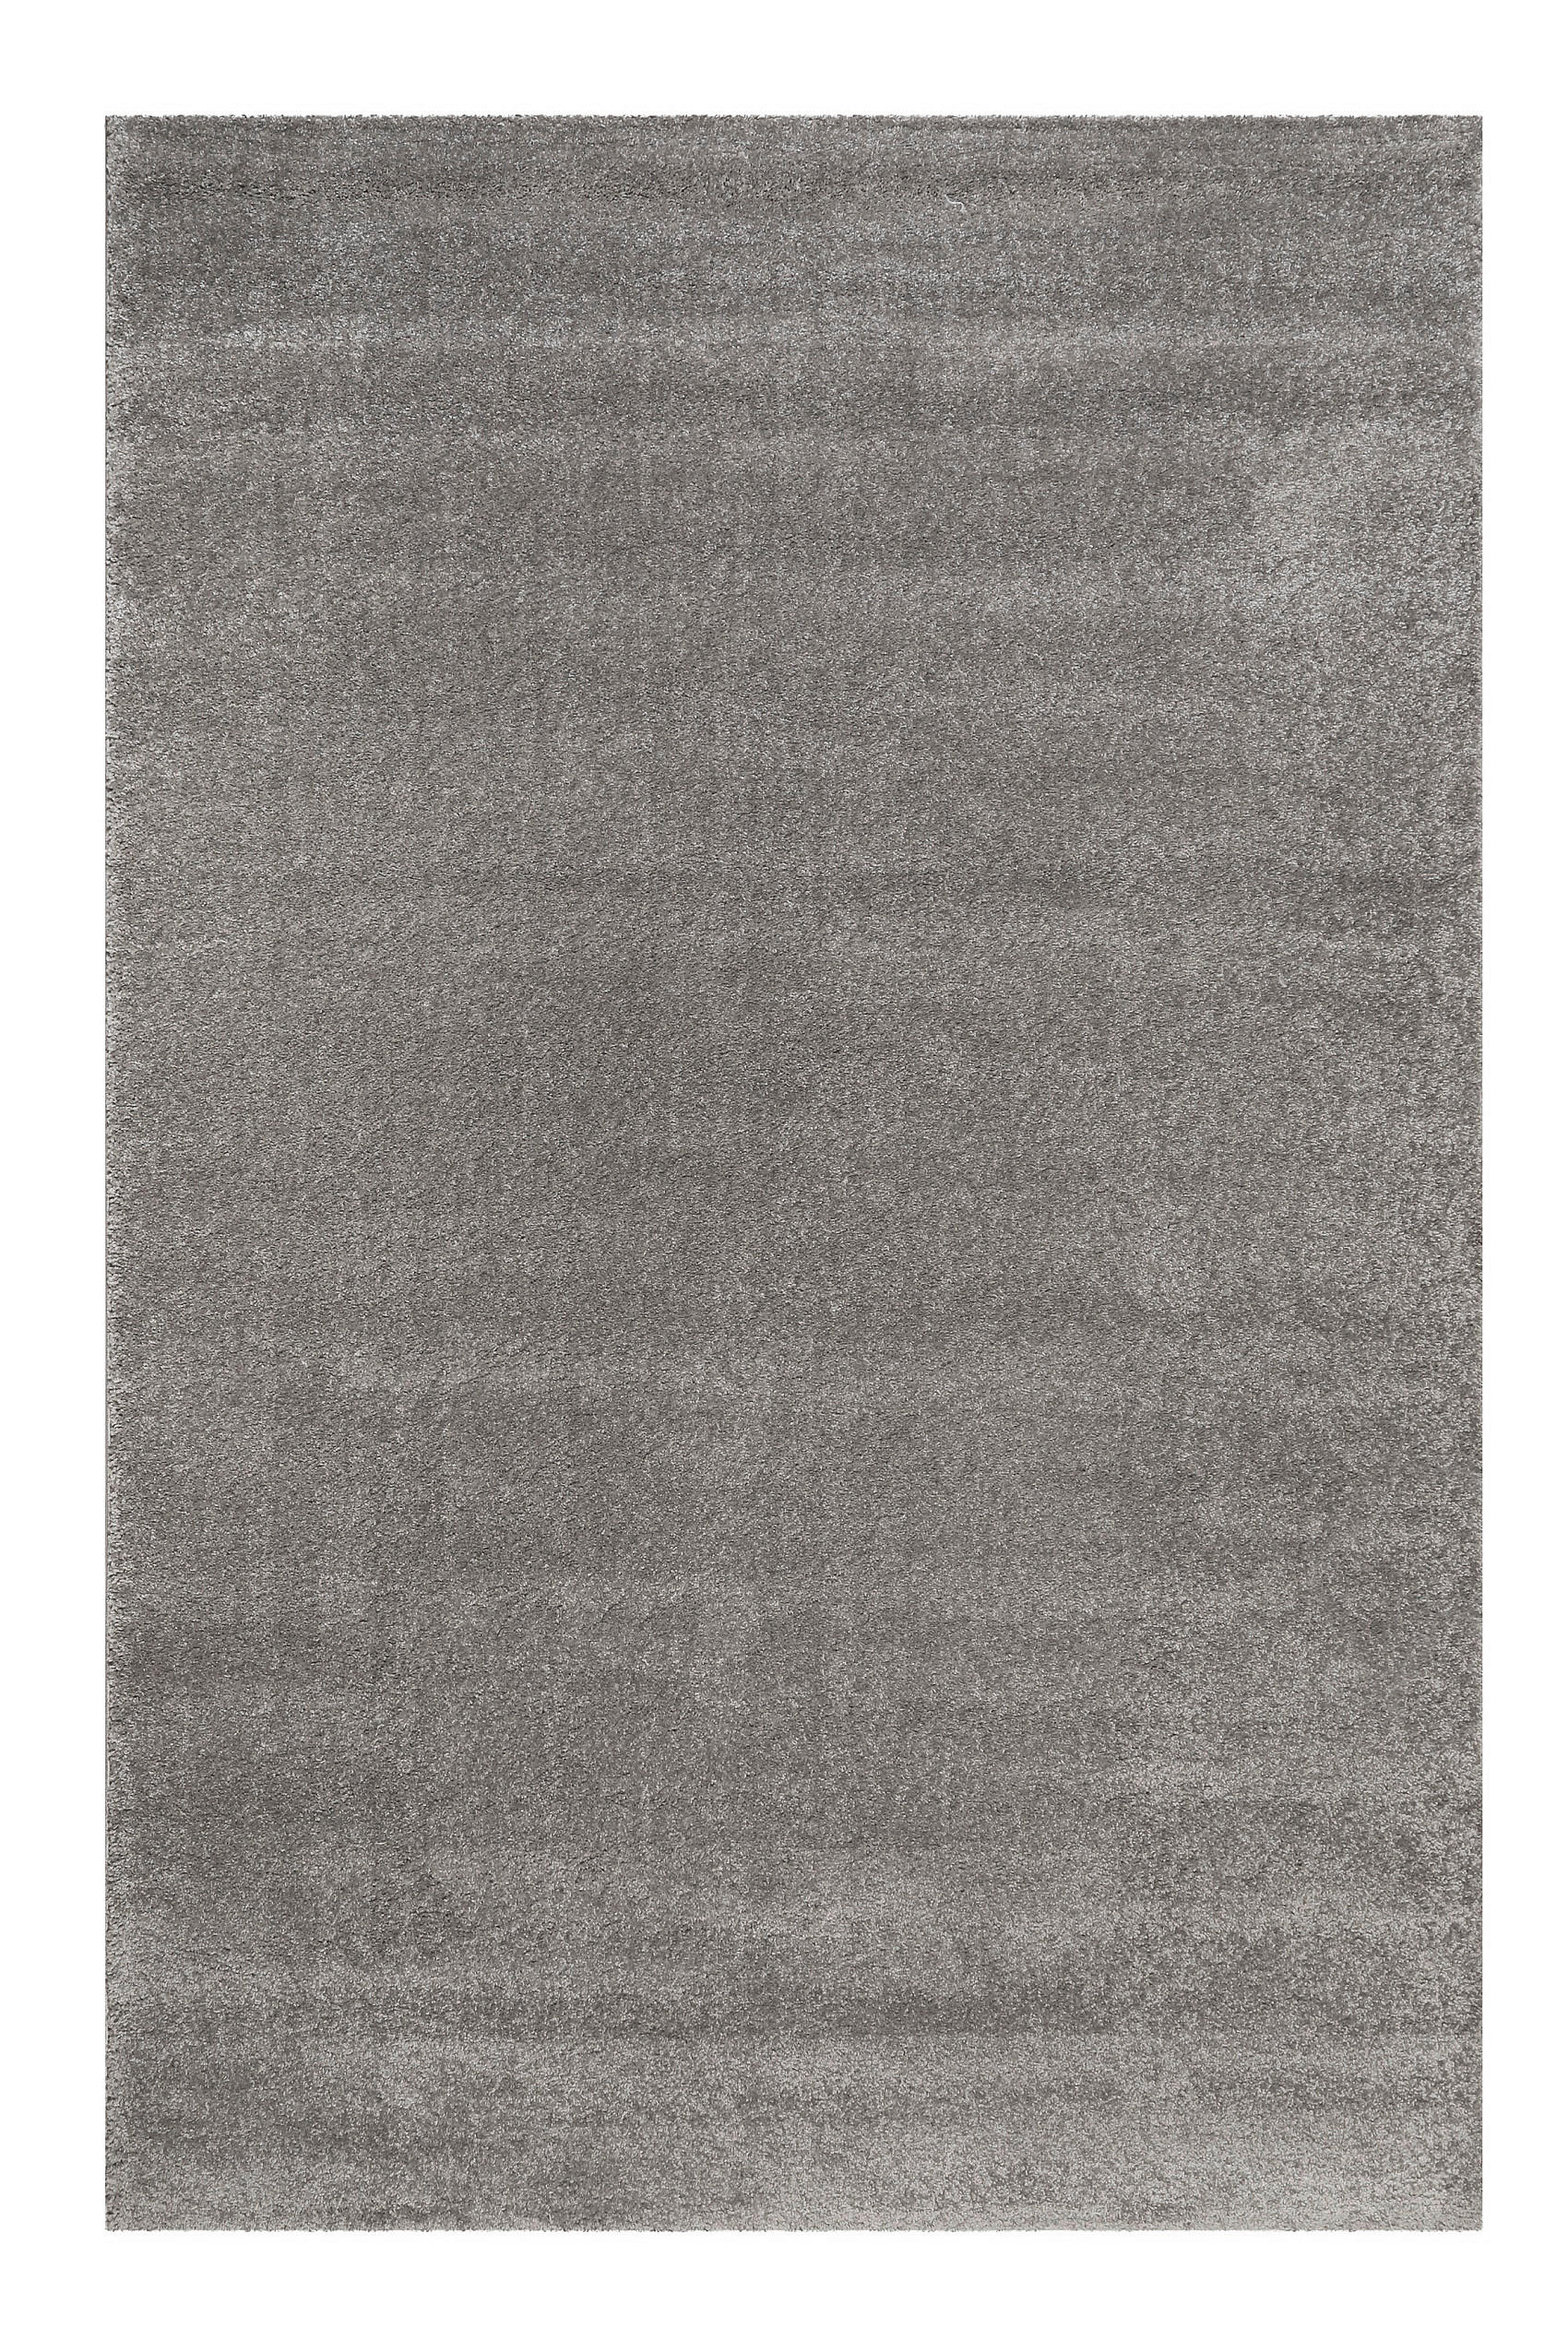 WEBTEPPICH 80/150 cm Tilda  - Grau, Design, Textil (80/150cm) - Novel